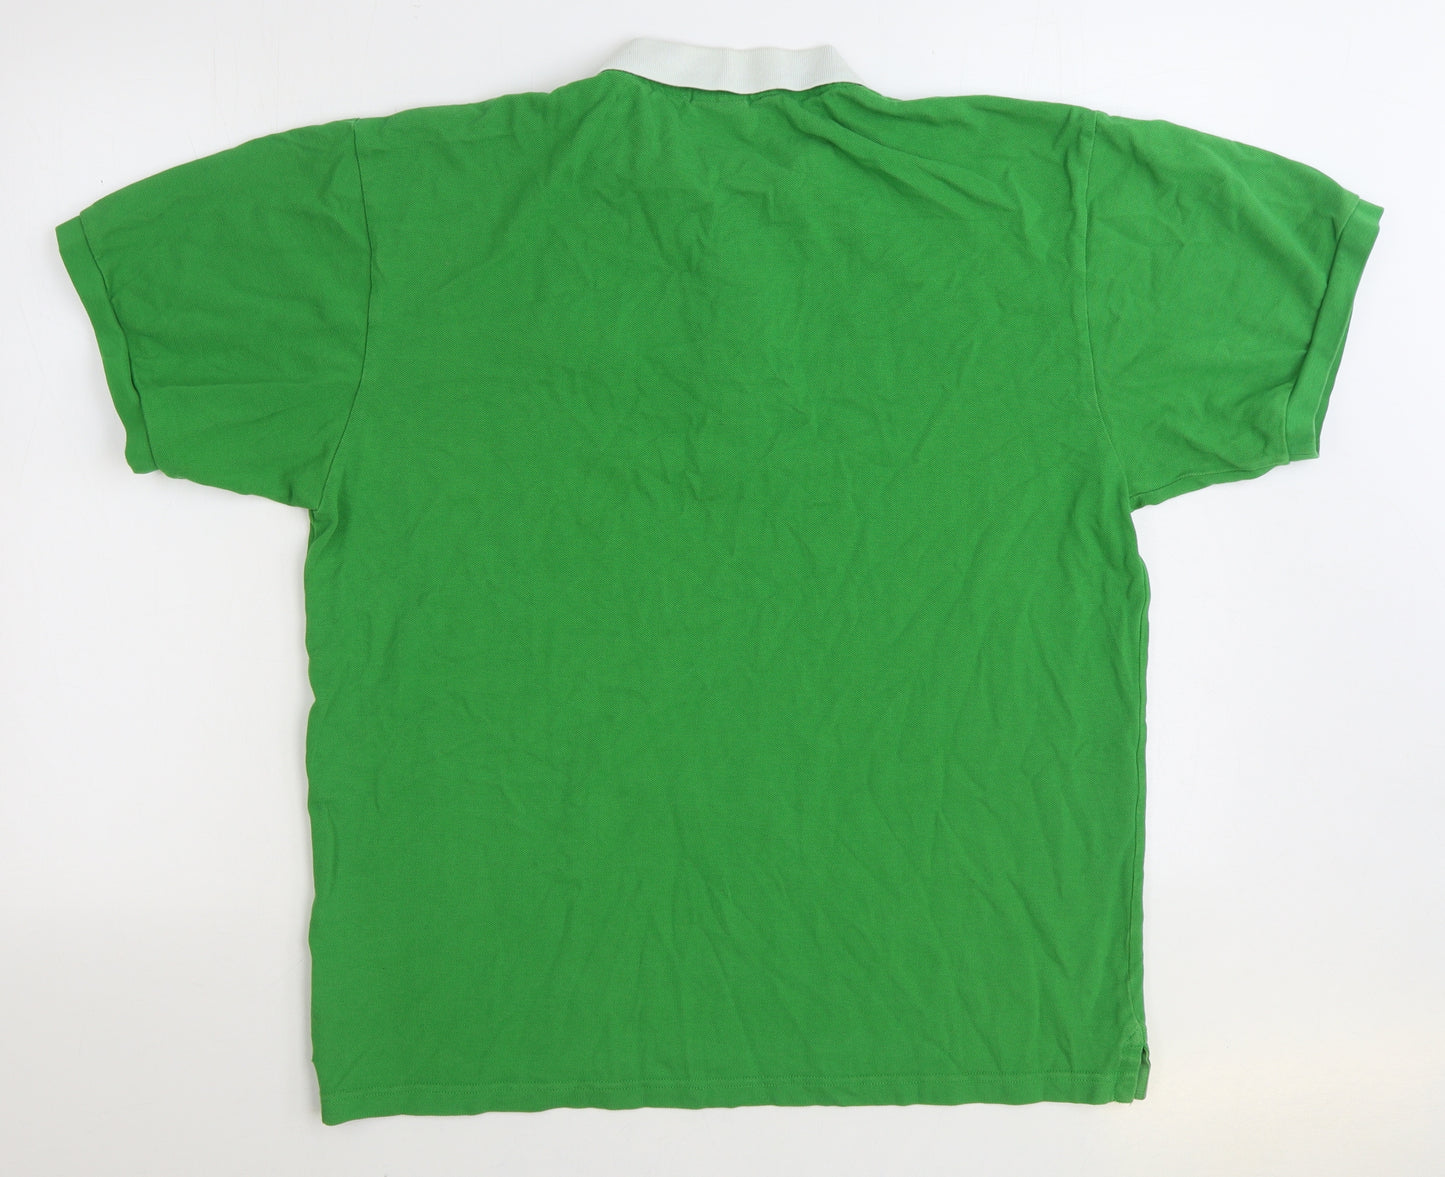 Rugid Mens Green 100% Cotton Polo Size XL Collared Button - Ireland